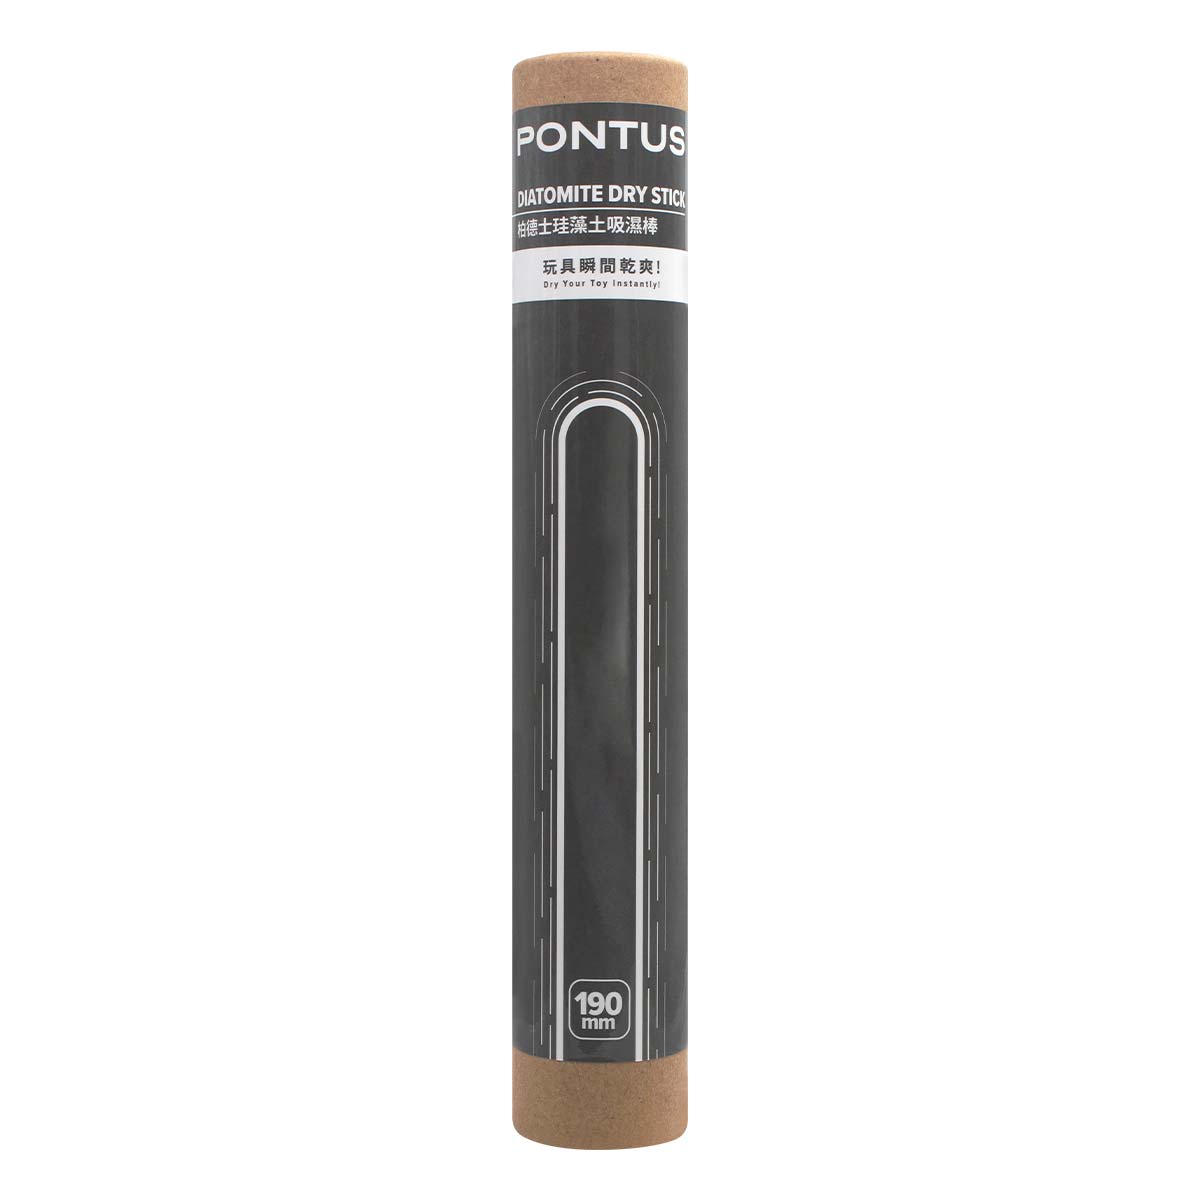 Pontus Diatomite Dry Stick (For male toys)-p_2